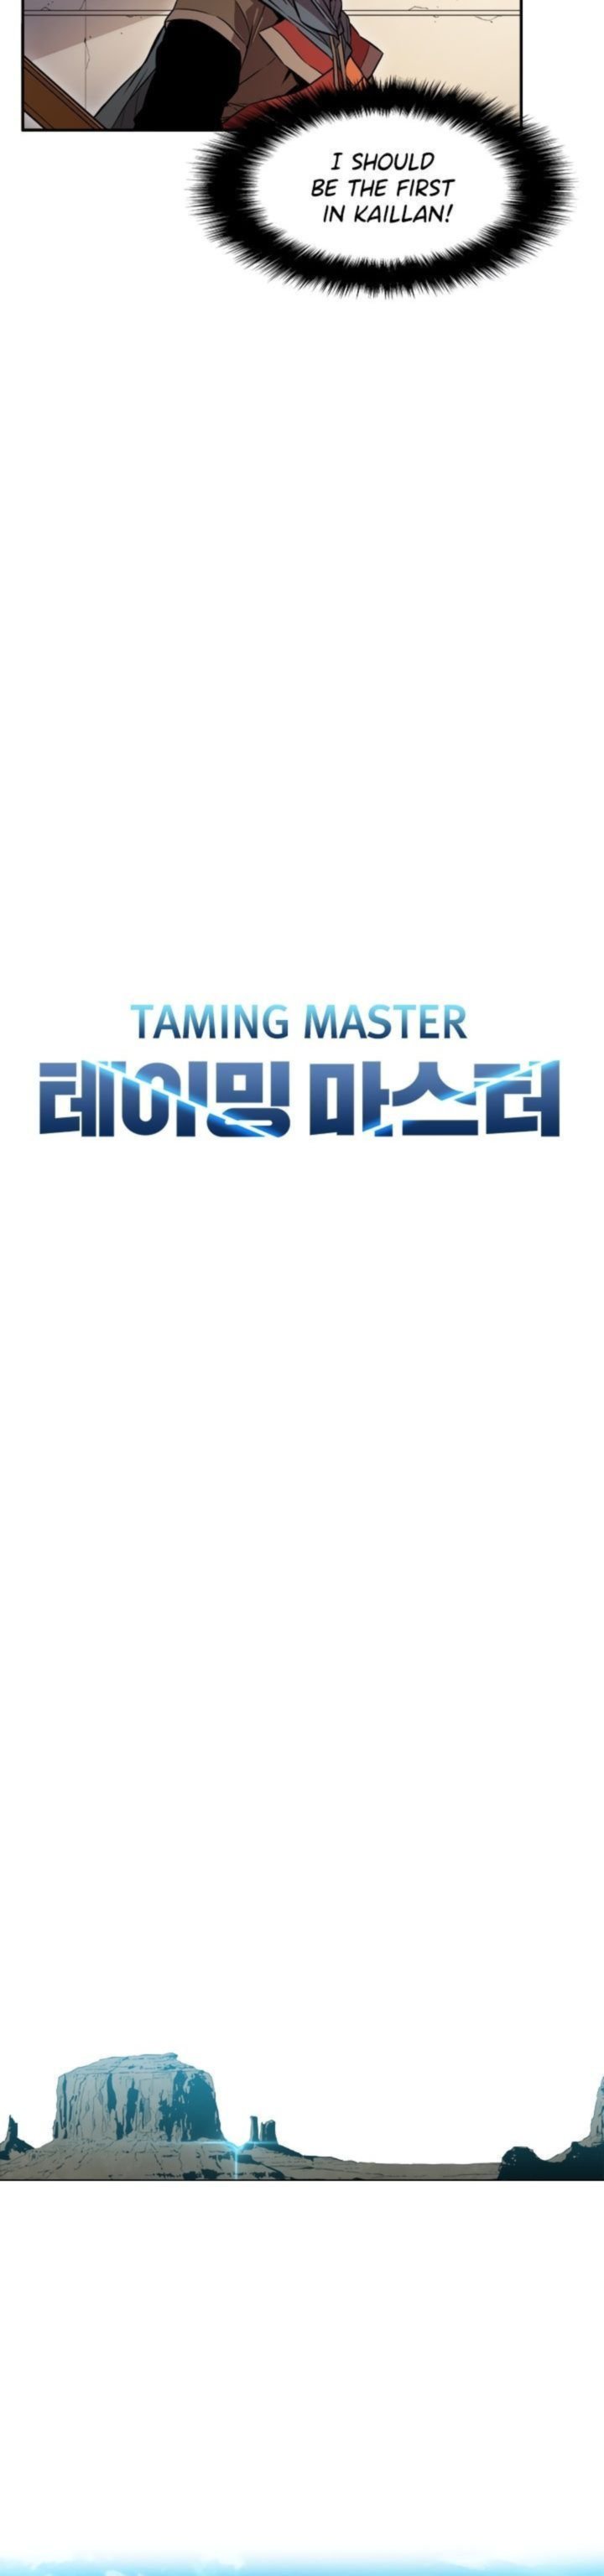 Taming Master 3 4